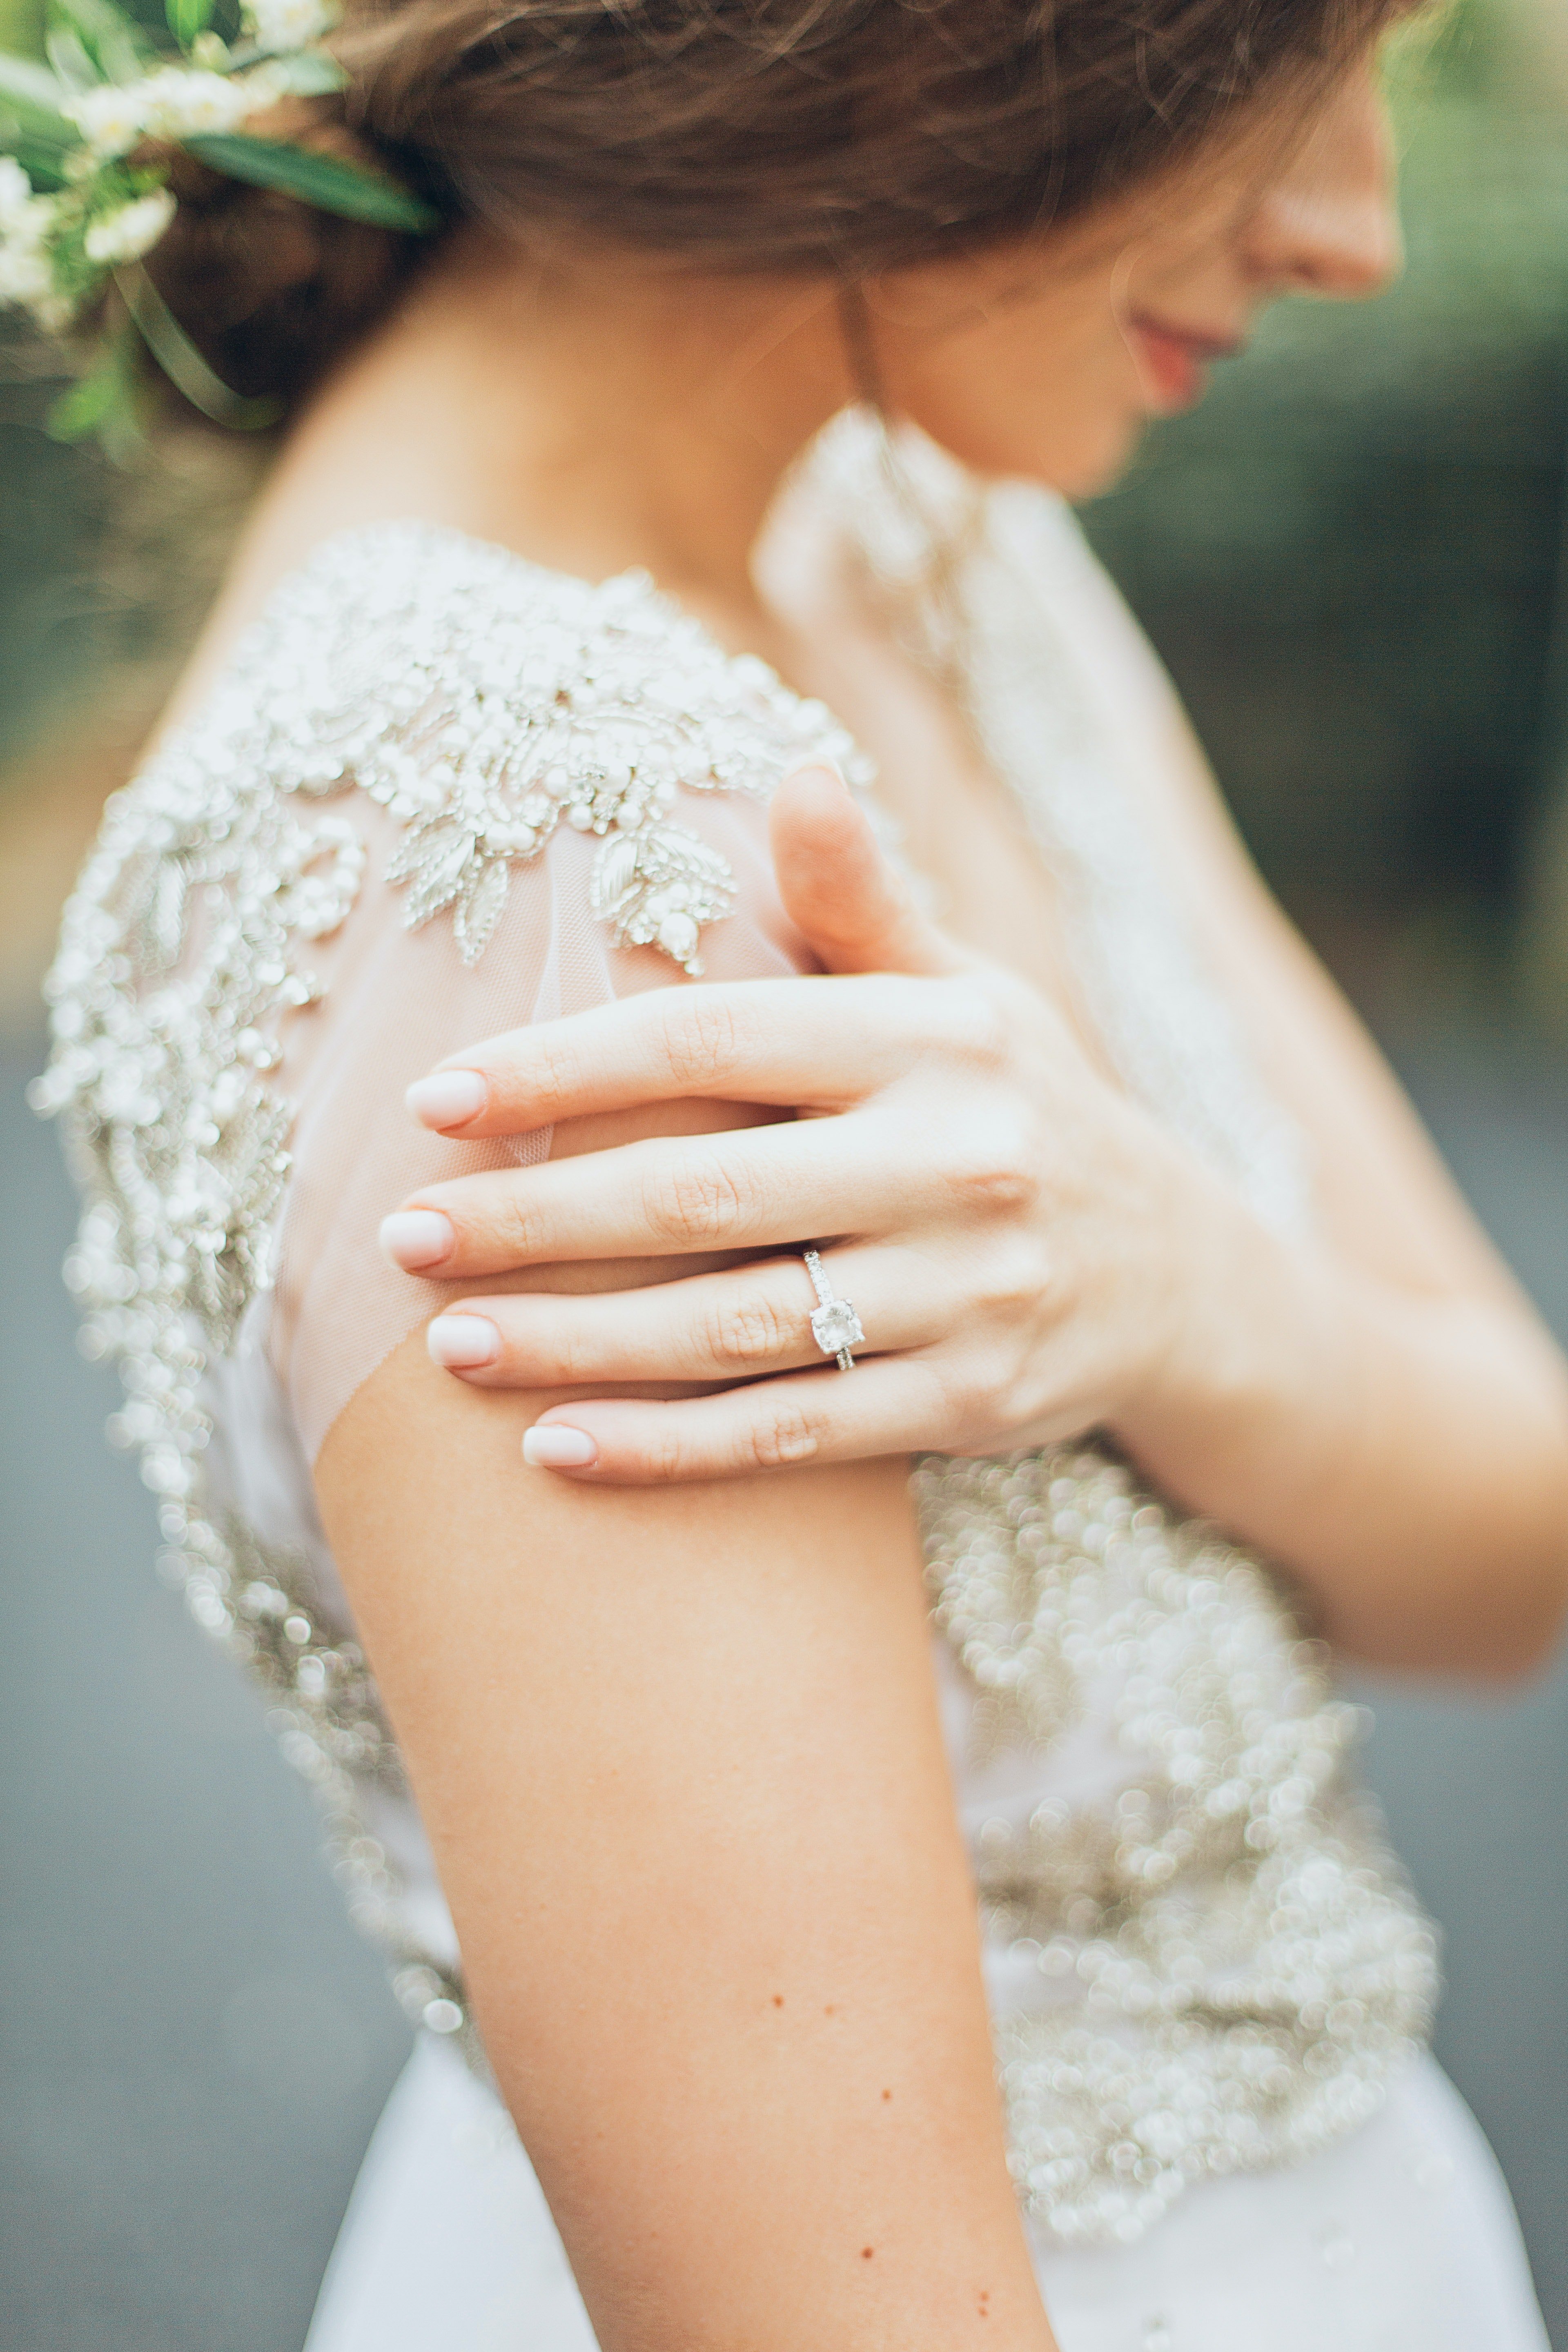 Sasha looked stunning in her wedding dress | Photo: Pexels